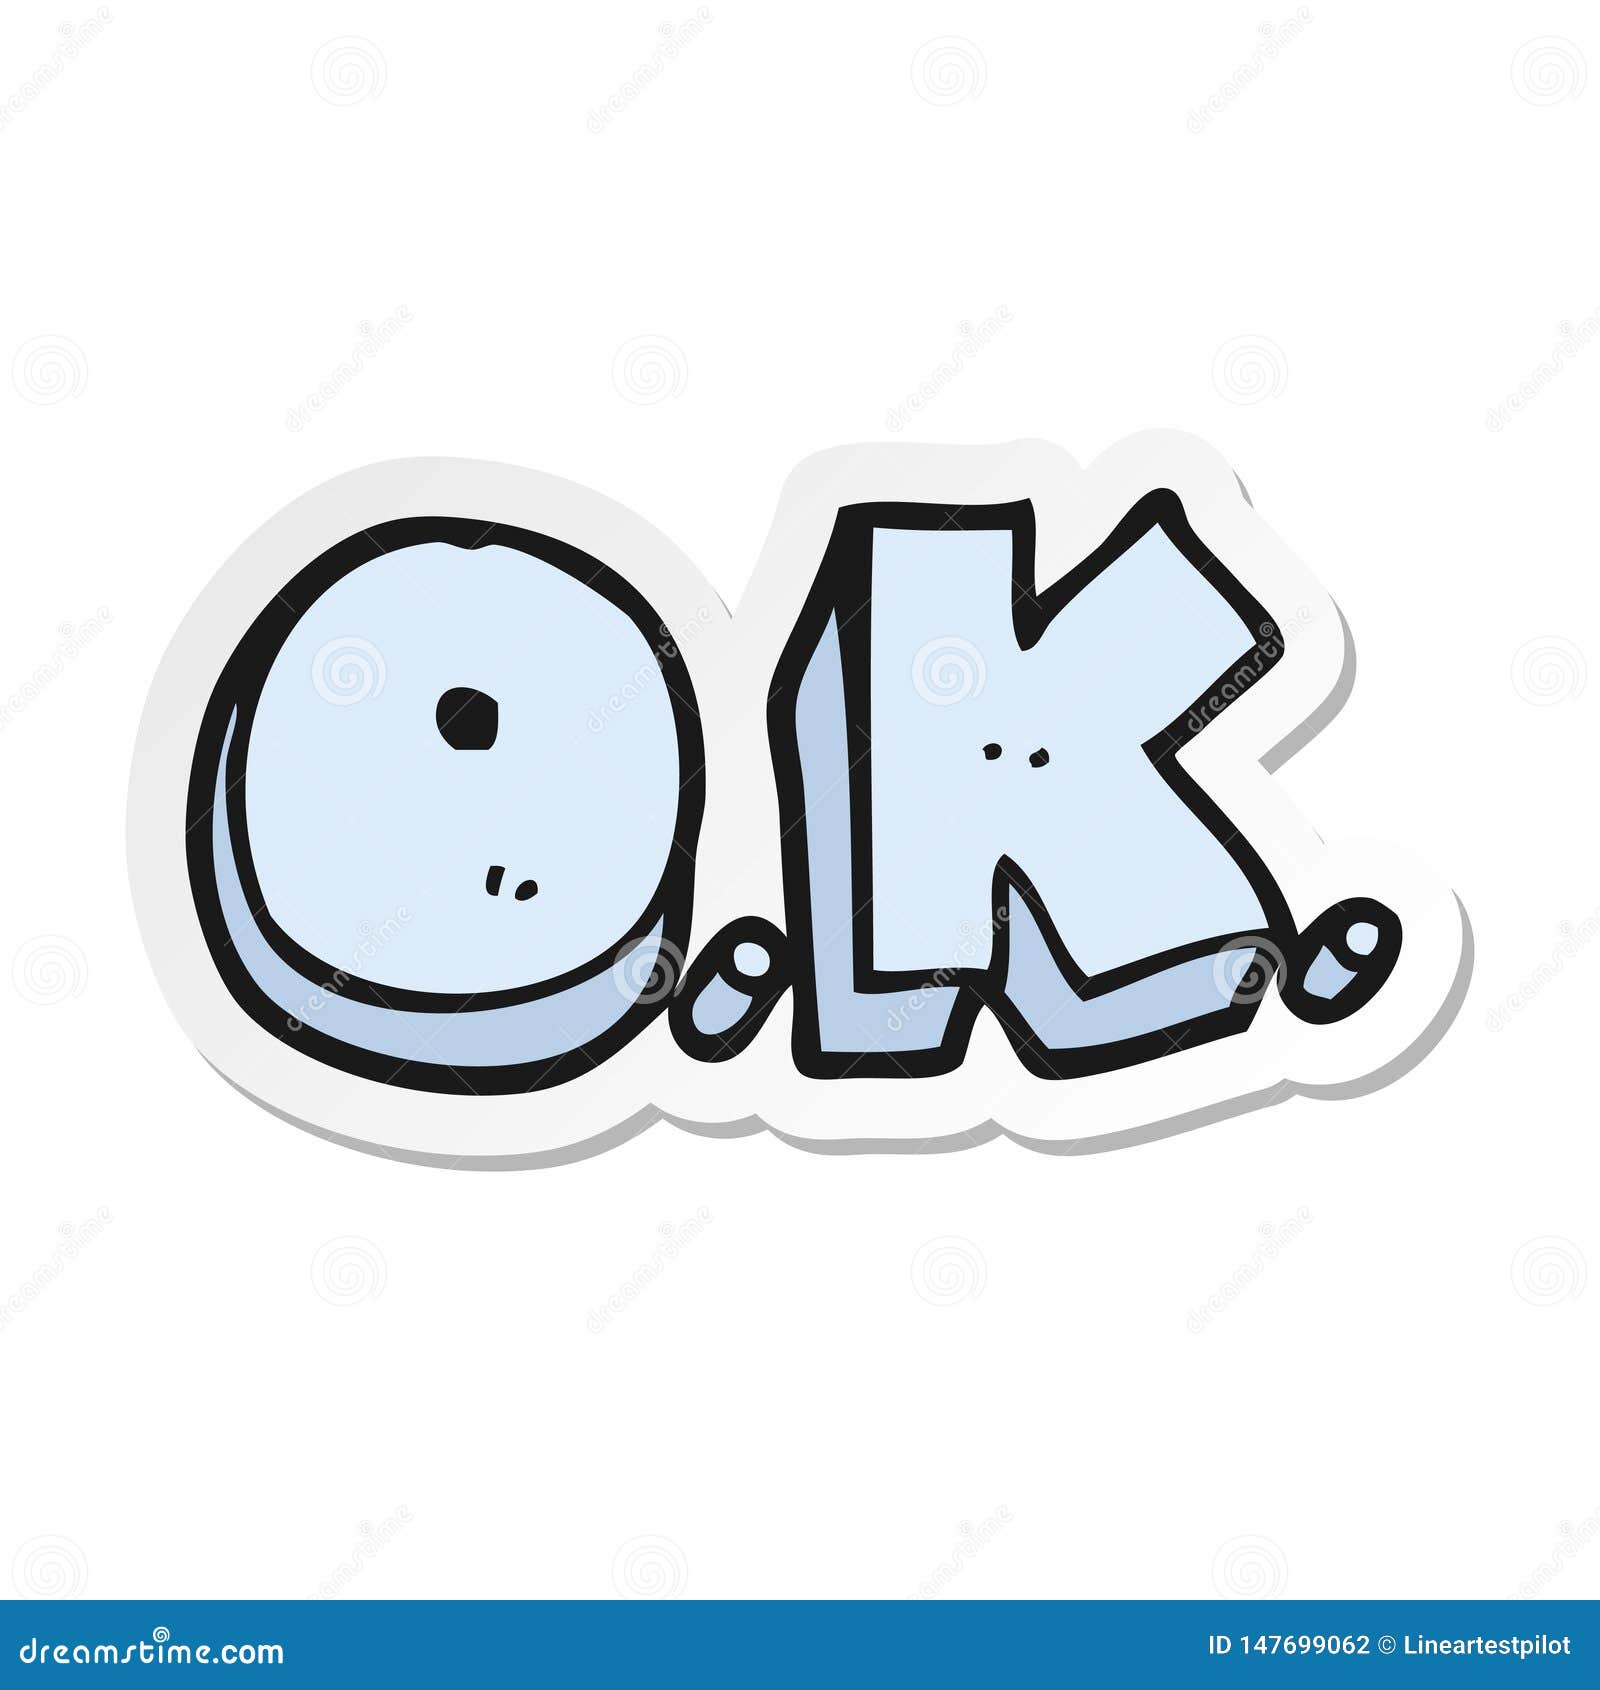 Sticker of a Cartoon Word OK Stock Vector - Illustration of drawing,  handdrawn: 147699062